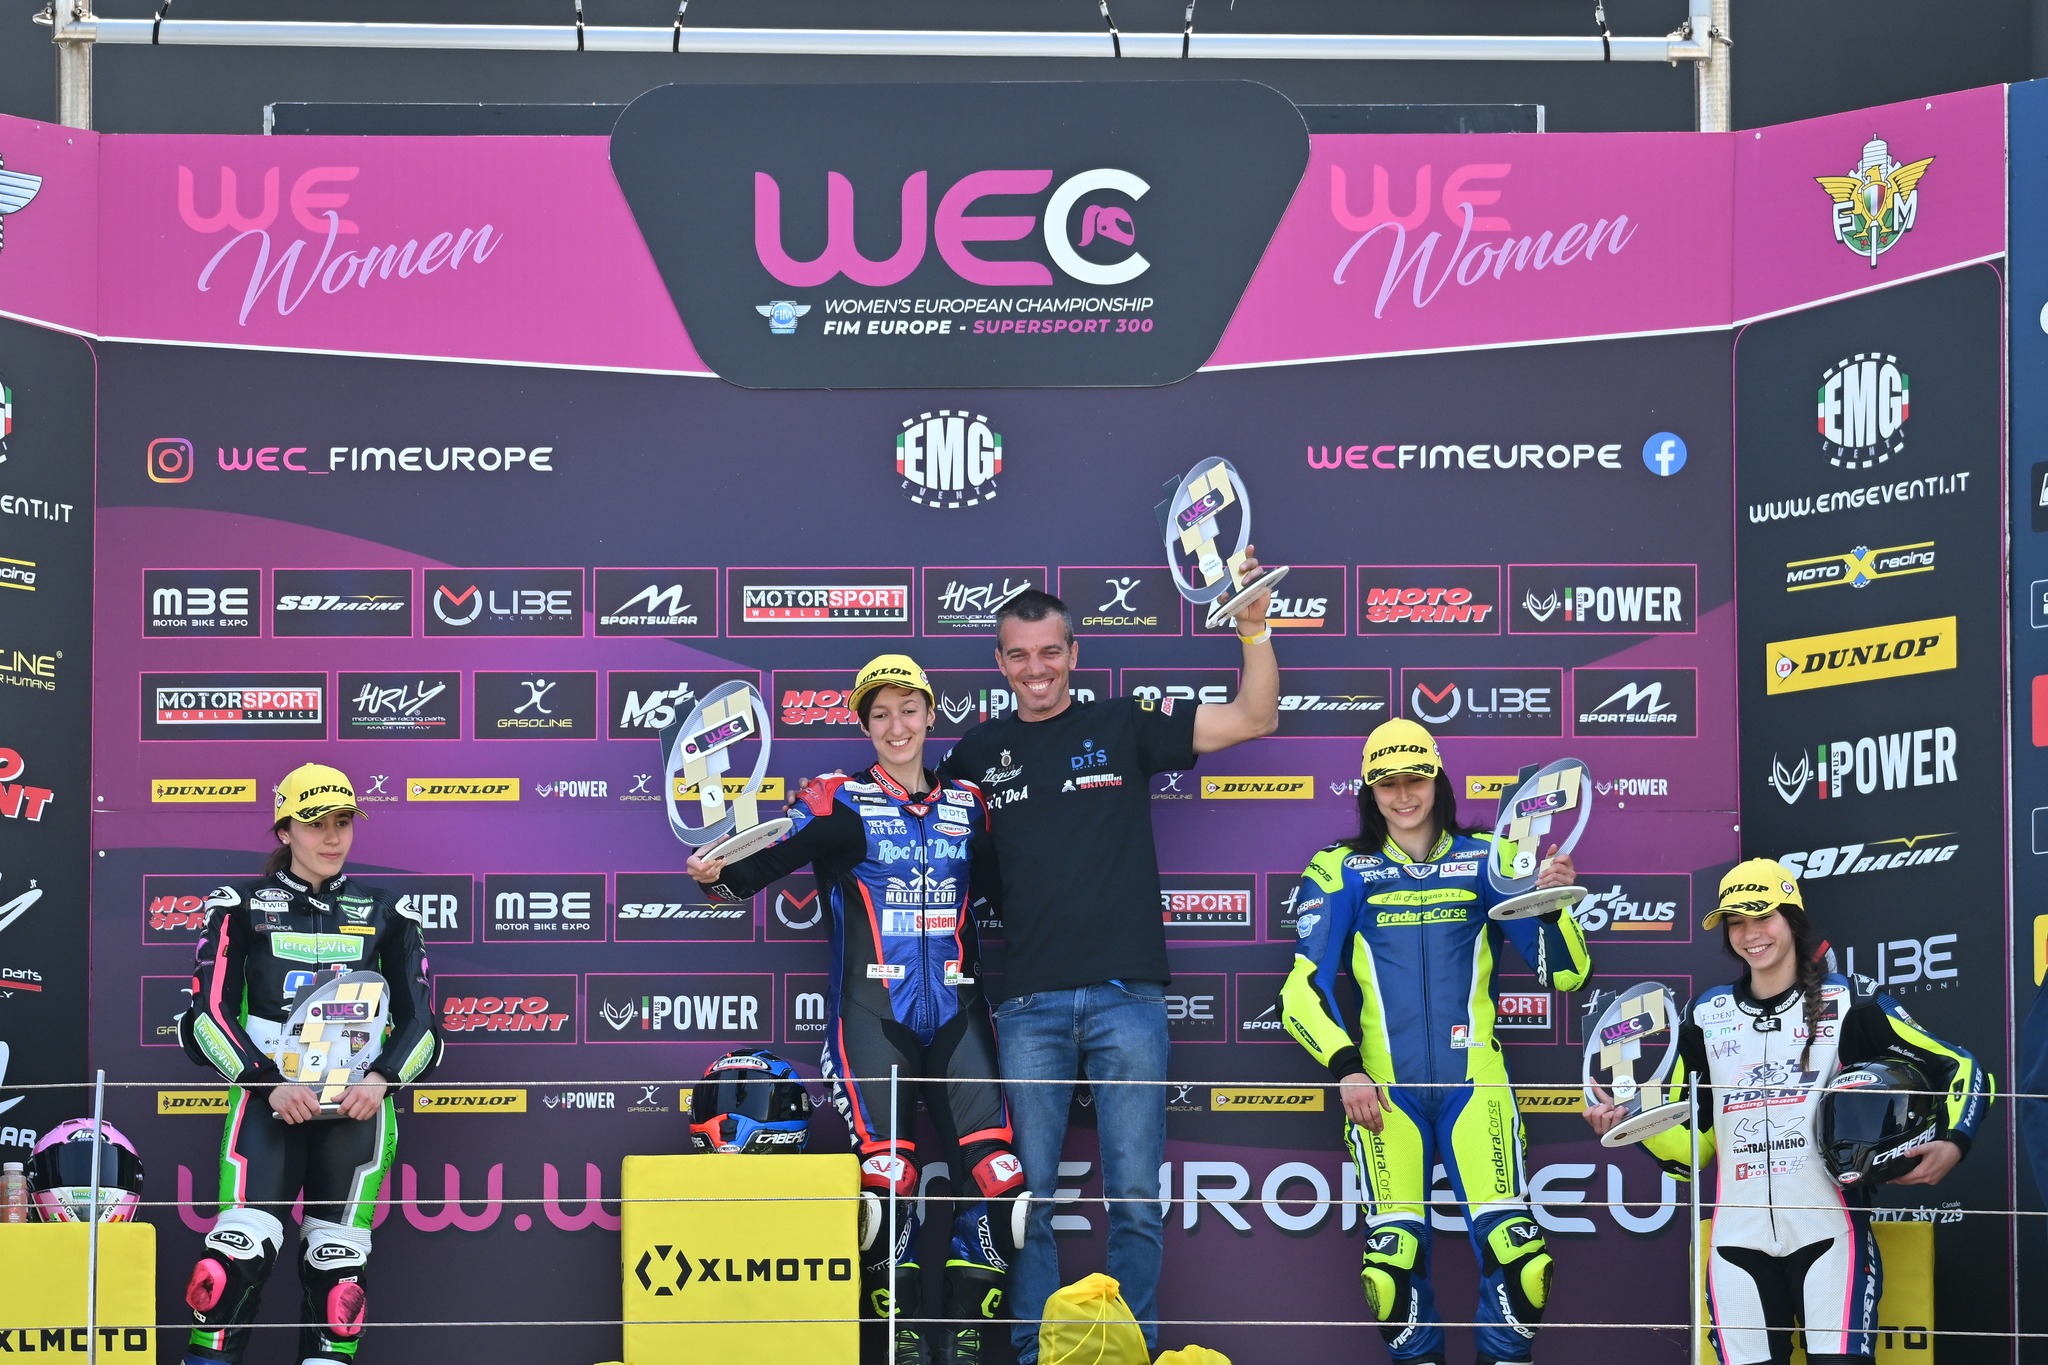 European Women’s Championship FIM